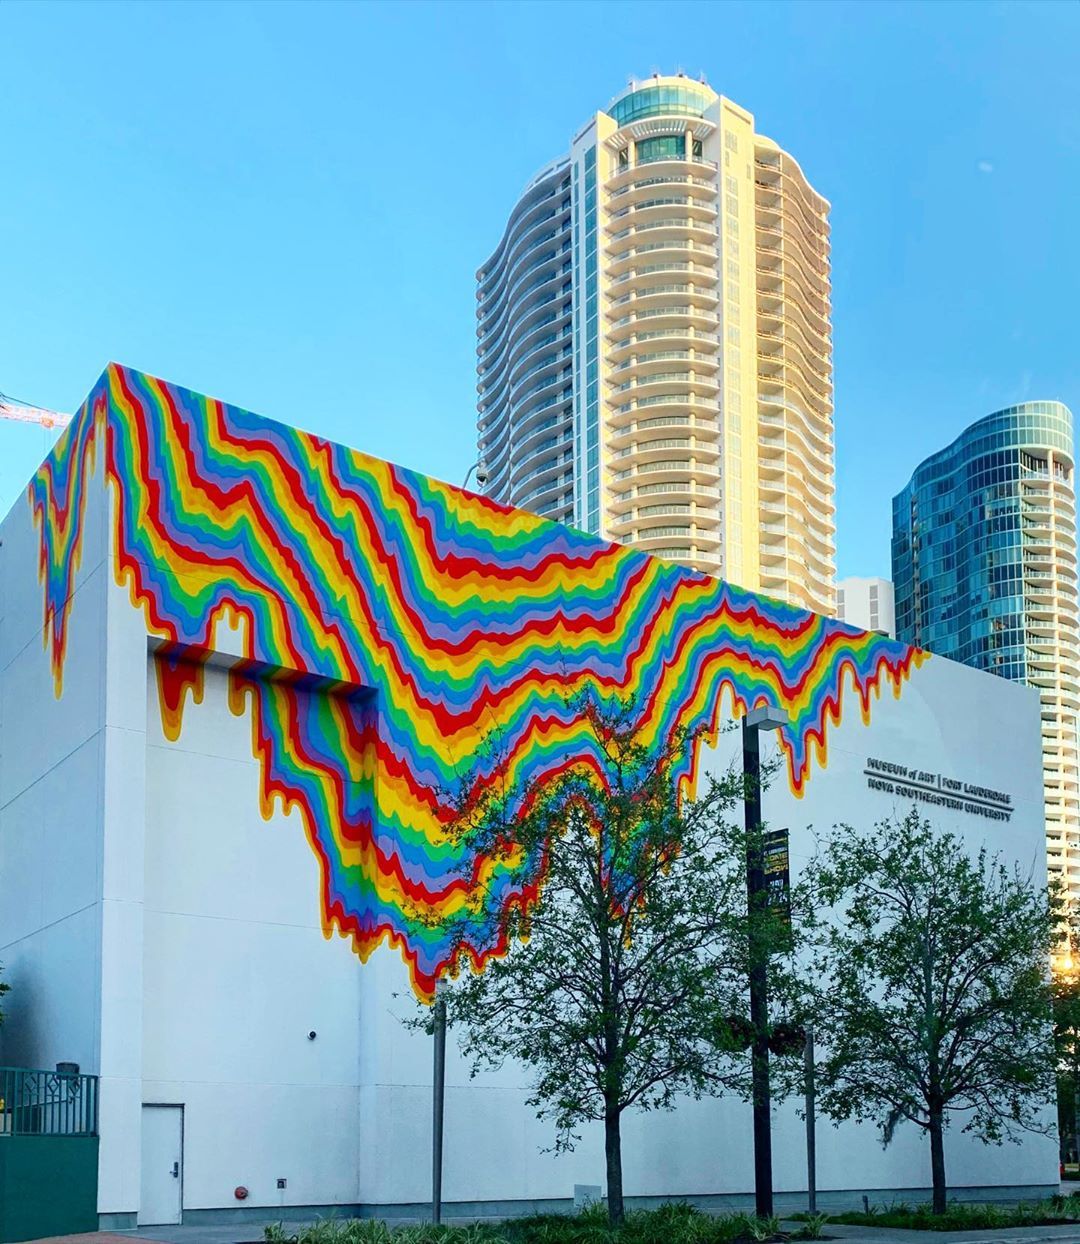 The NSU Art Museum wears public art on its walls, with murals by Miami-born artist, Jen Stark.